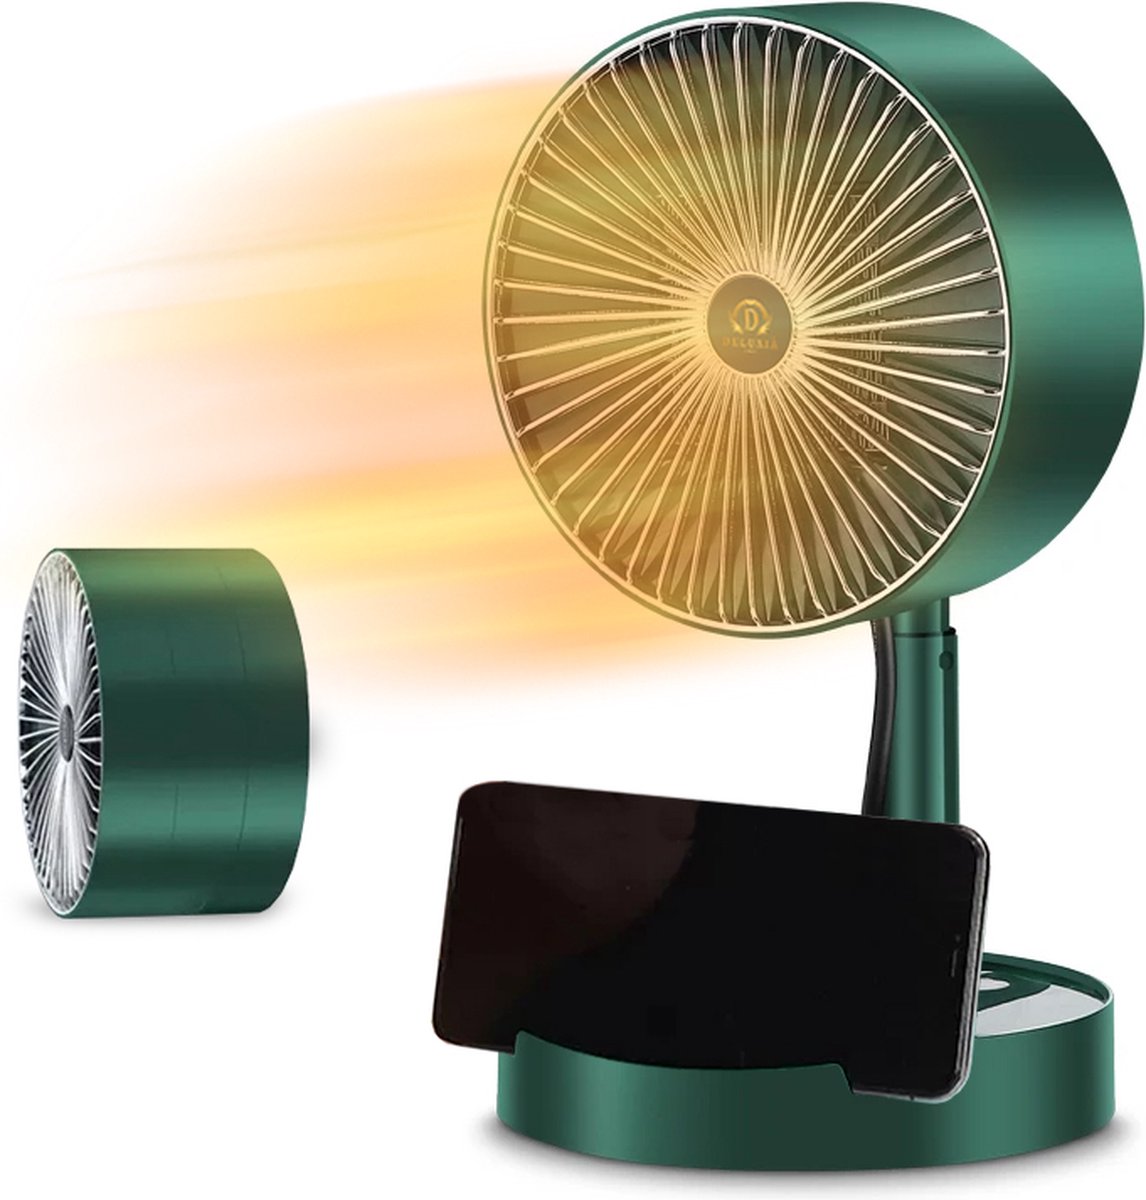 Ventilatorkachel - Kachelventilator - Bureau Verwarming - Verwarming Electrisch - Kachel Elektrisch - Verwarming - Warmte Ventilator - Warmeluchtblazer - In de hoogte verstelbaar en Opvouwbaar - Kado - Cadeau